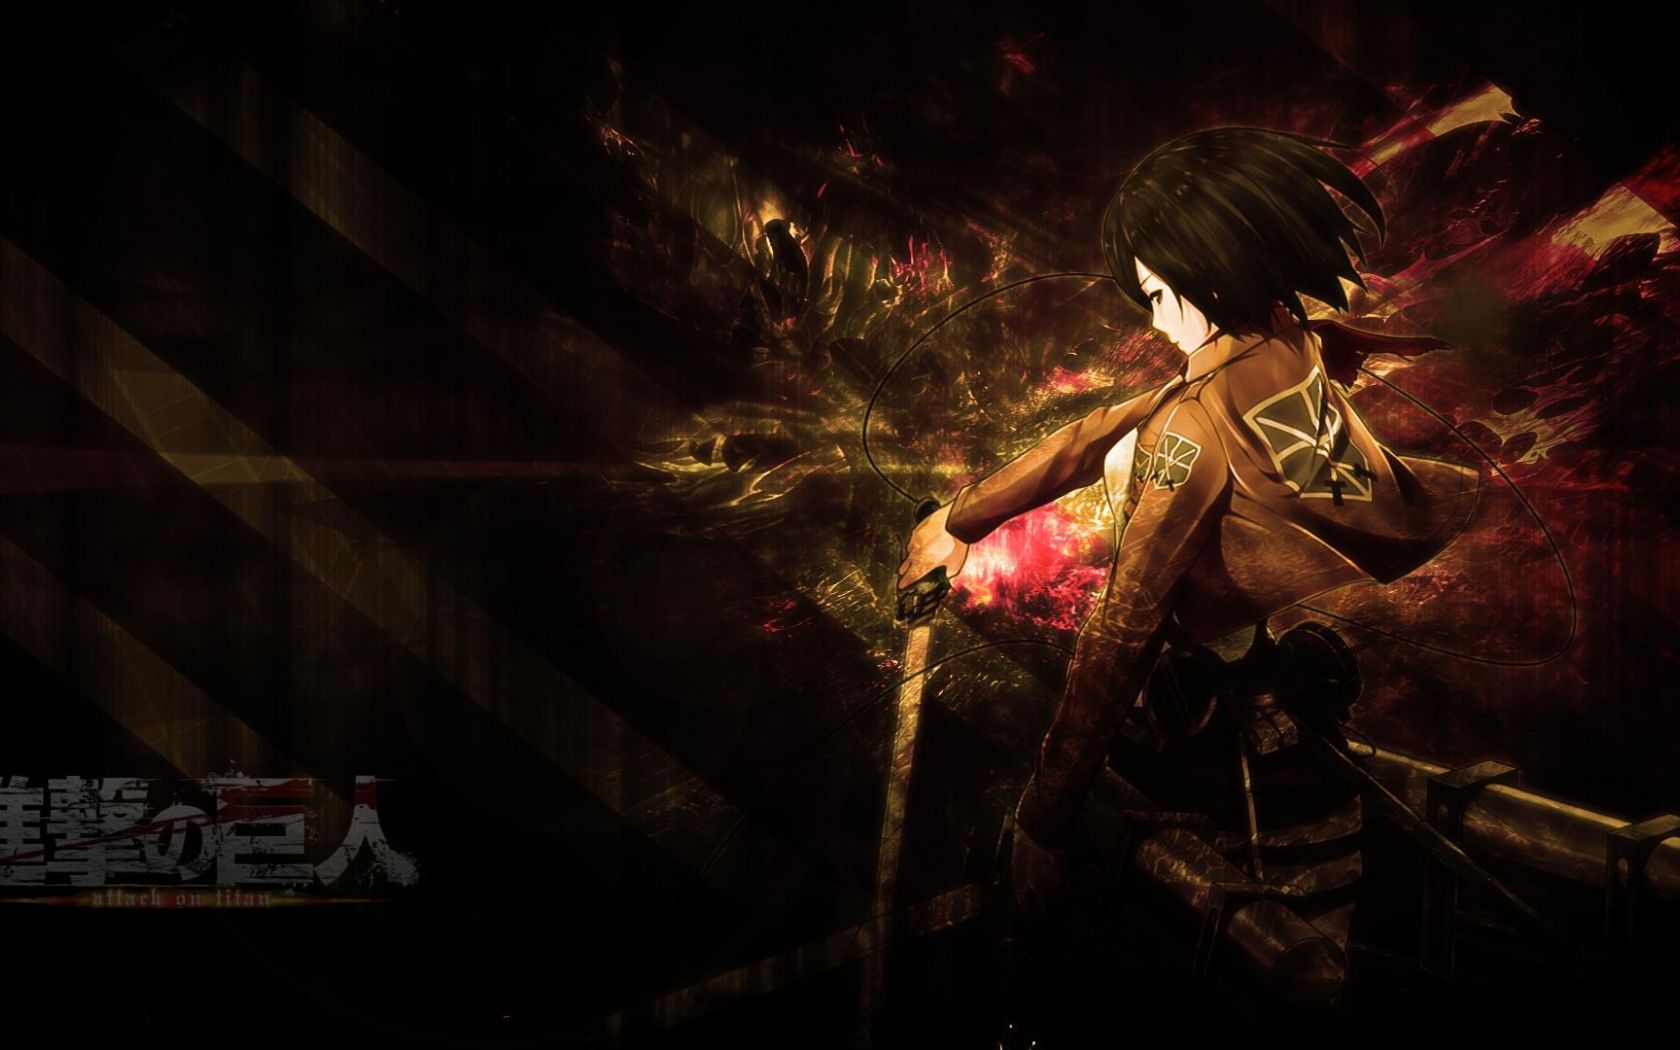 Free download Attack on Titan Mikasa Wallpaper